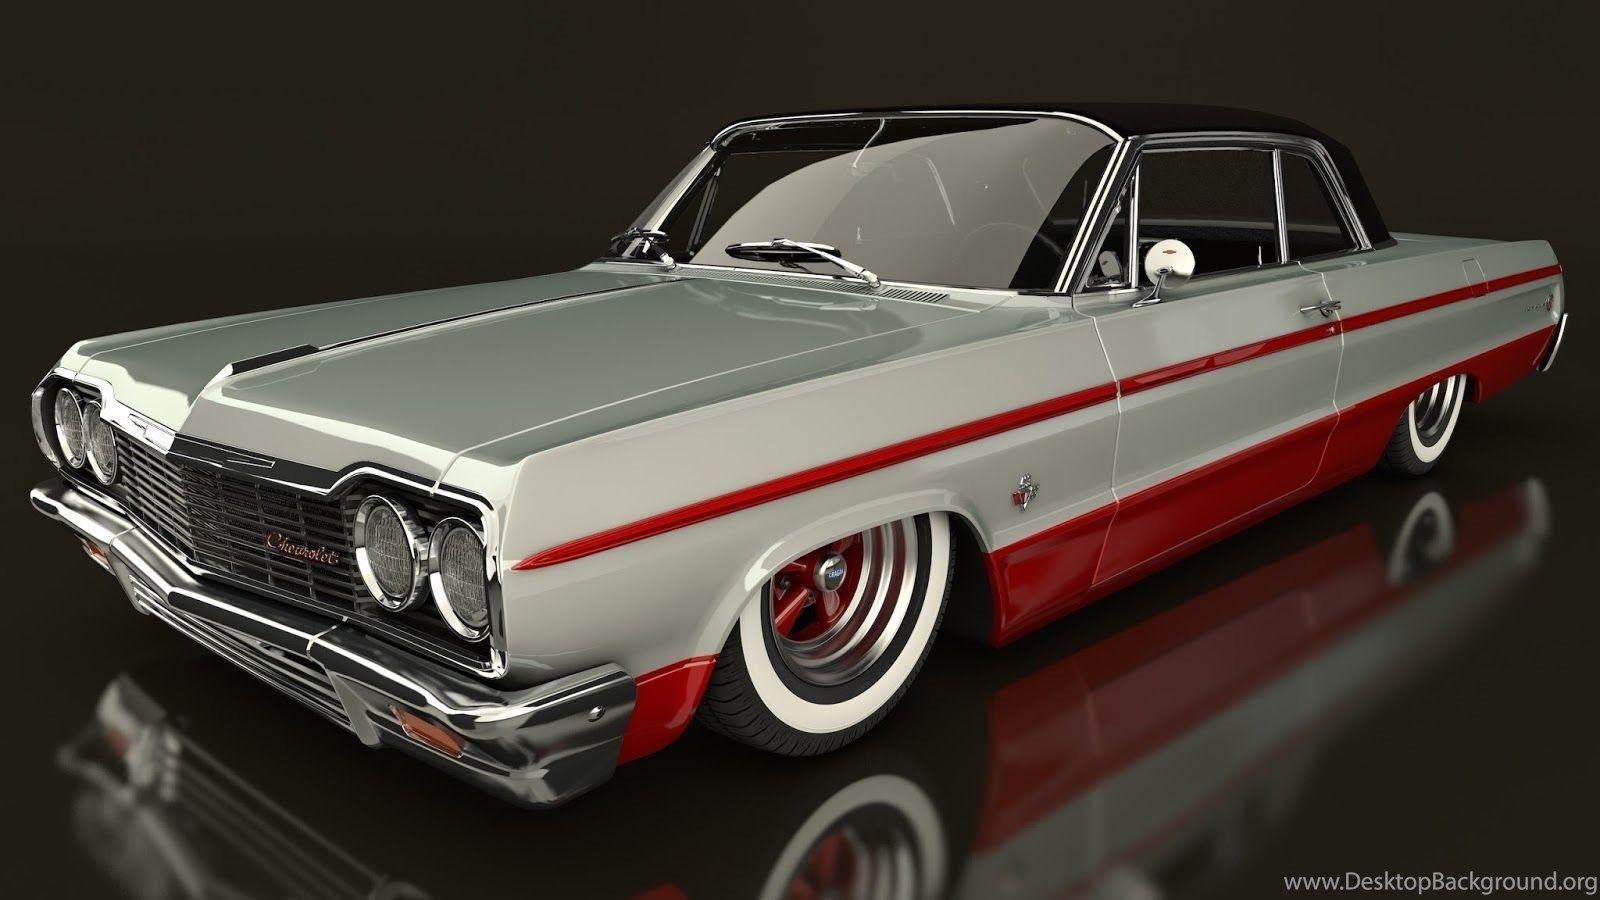 The Cars We Love Blog: 1964 Chevrolet Impala Desktop Background